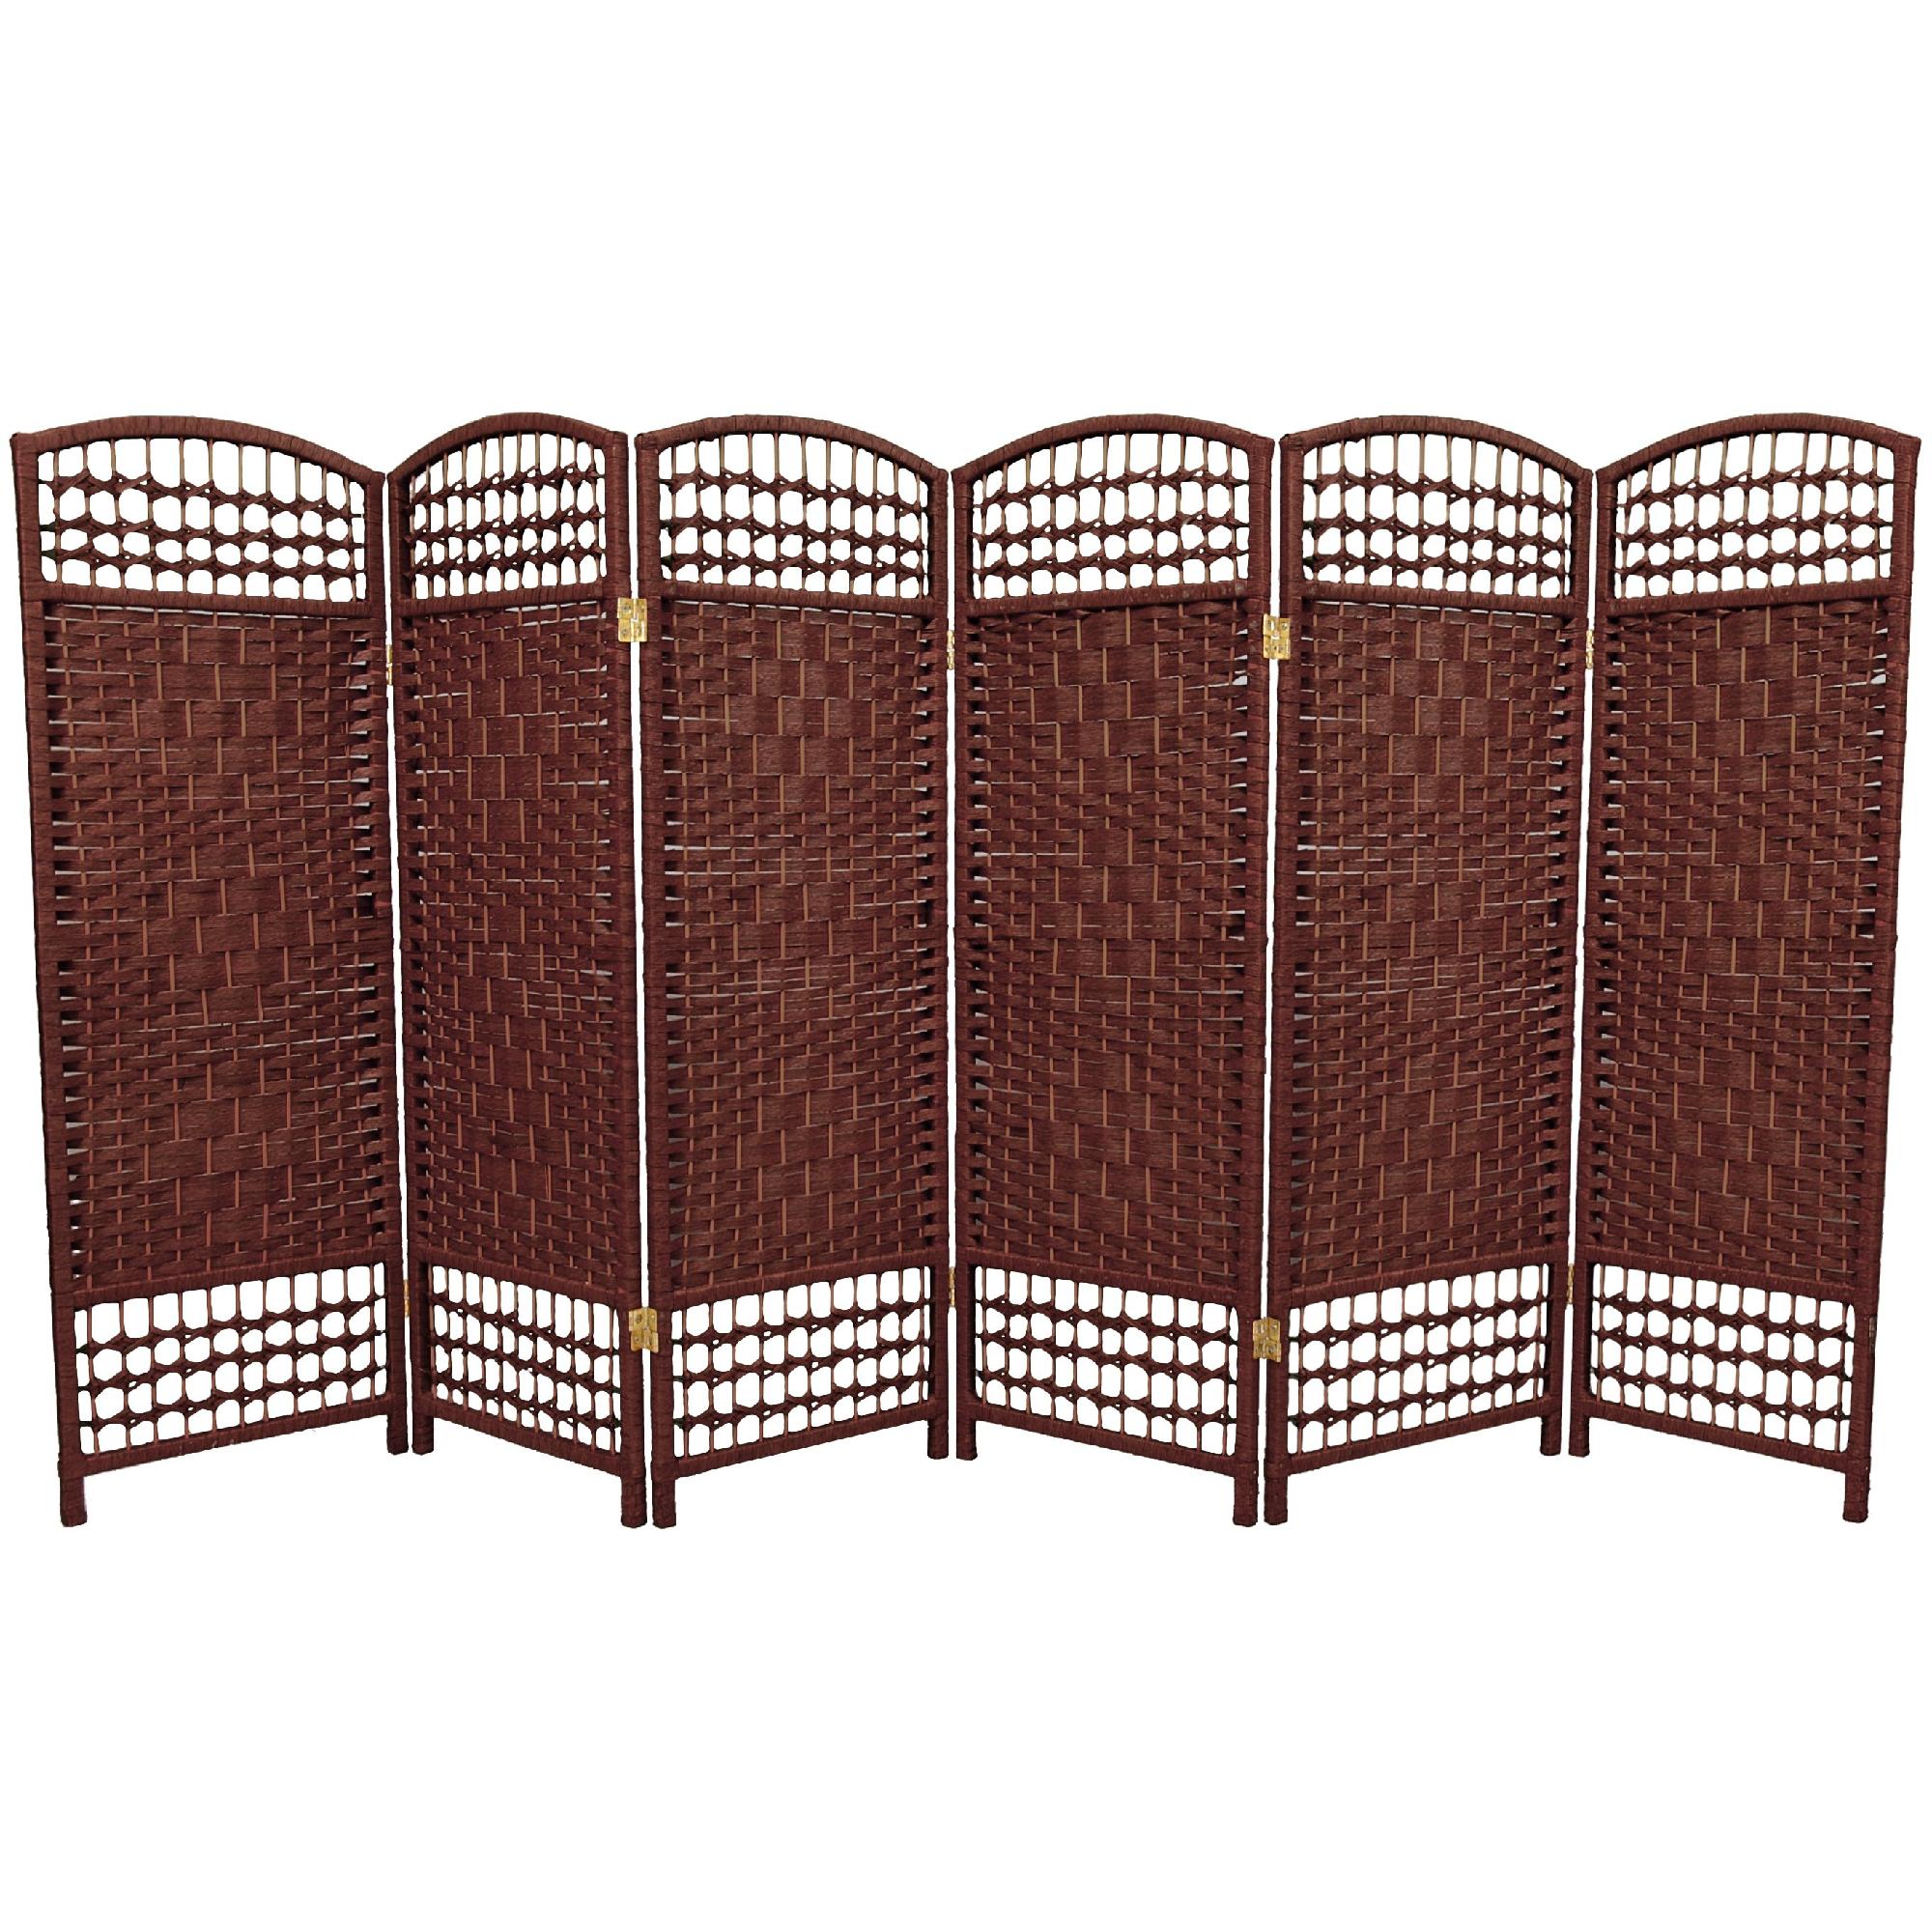 Oriental Furniture 4 ft. Tall Fiber Weave Room Divider - 6 Panel - Dark Red